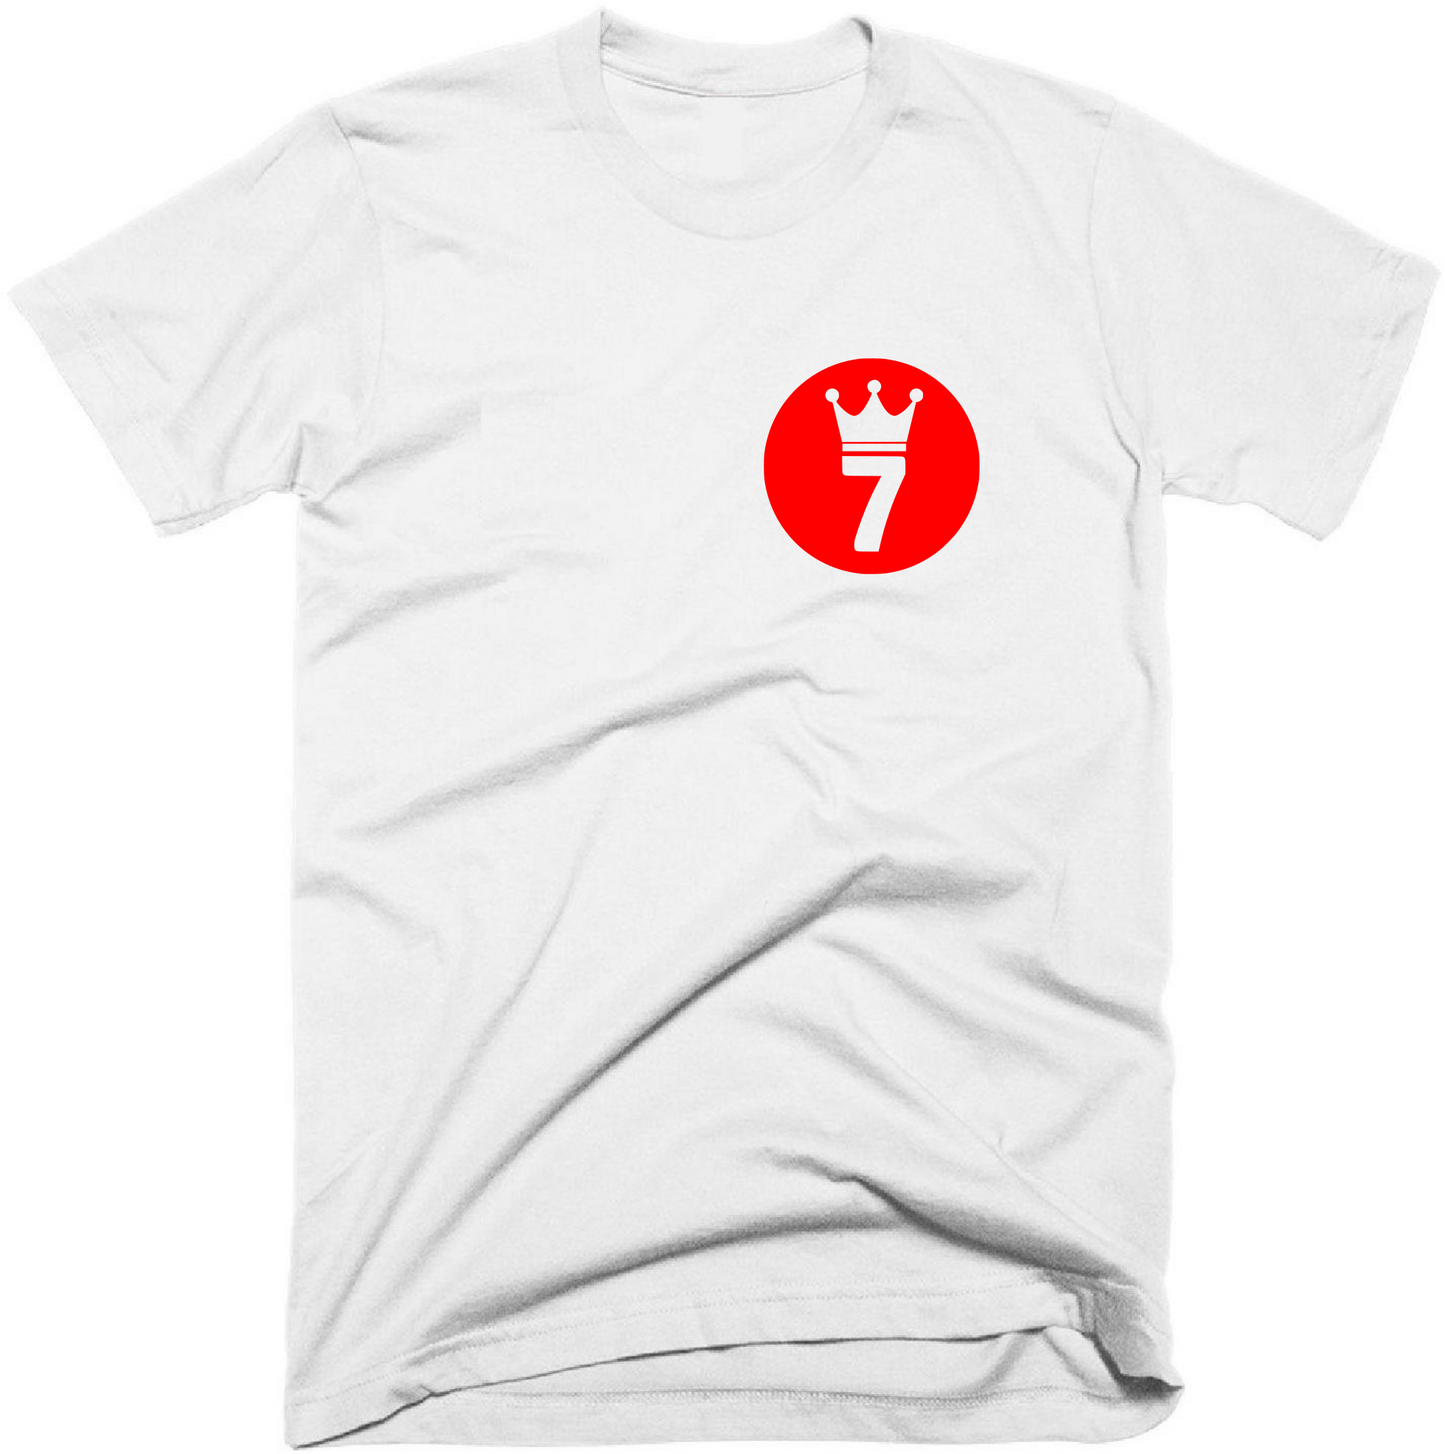 Eric Cantona - King 7 - Circle design - Mens T- Shirt